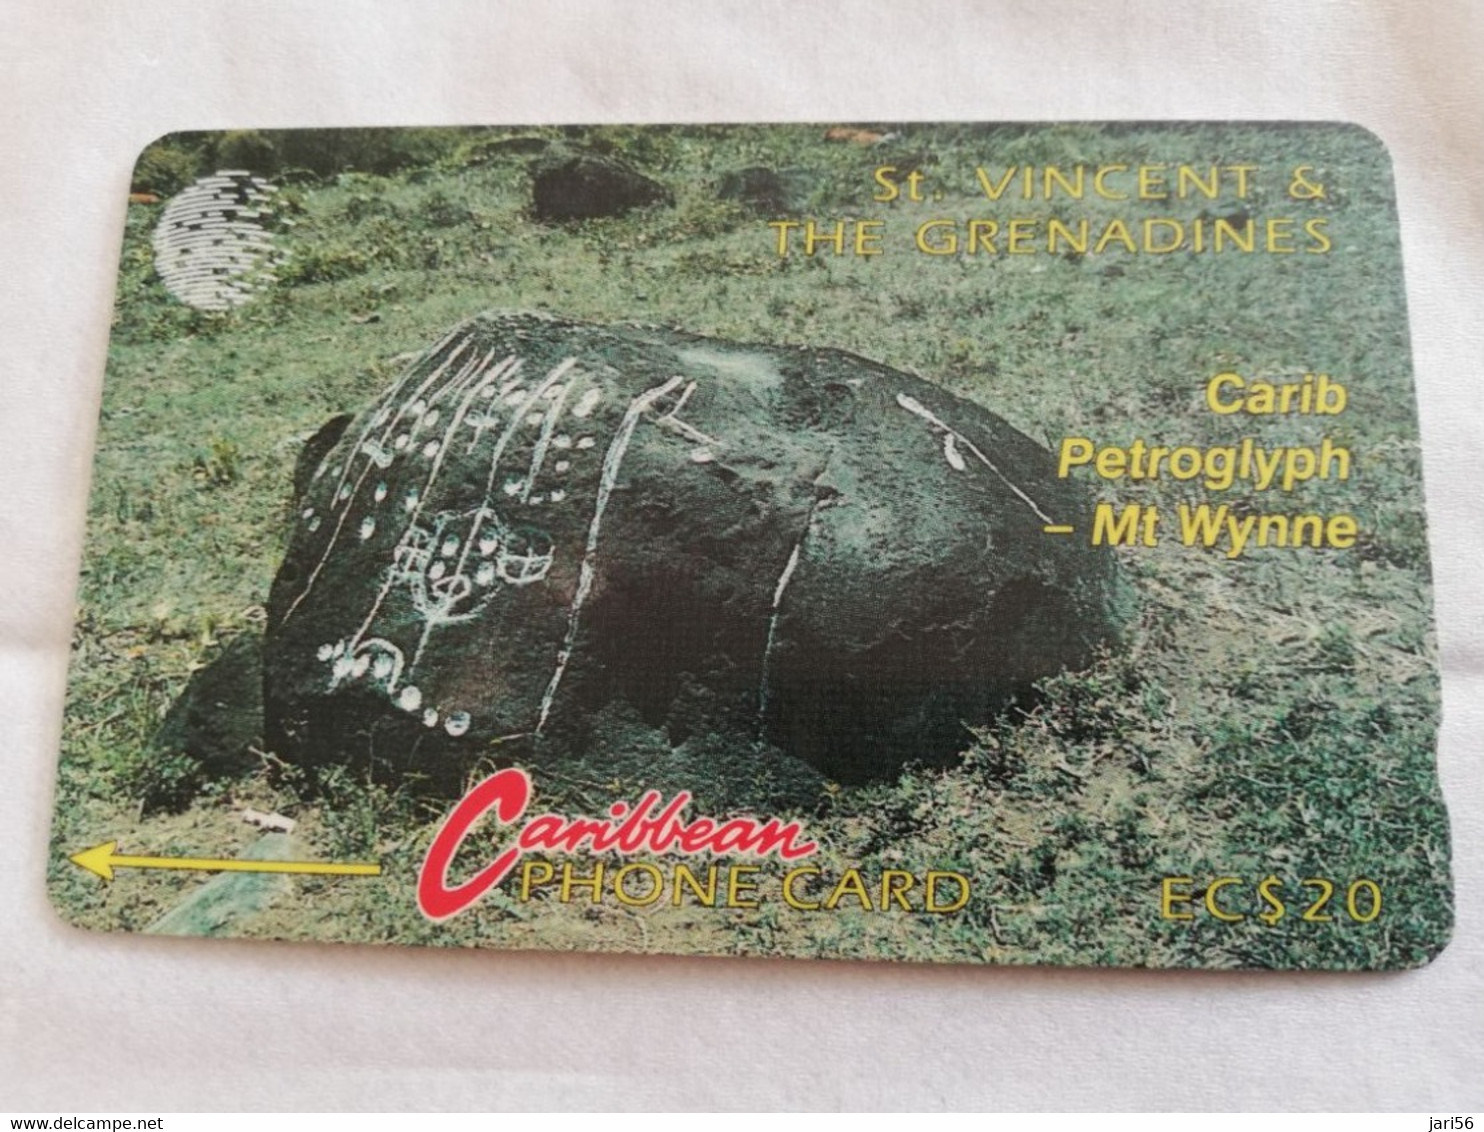 ST VINCENT & GRENADINES  GPT CARD   $ 20,-  5CSVB  CARIB PETROGLYPH     C&W    Fine Used  Card  **5644 ** - St. Vincent & The Grenadines